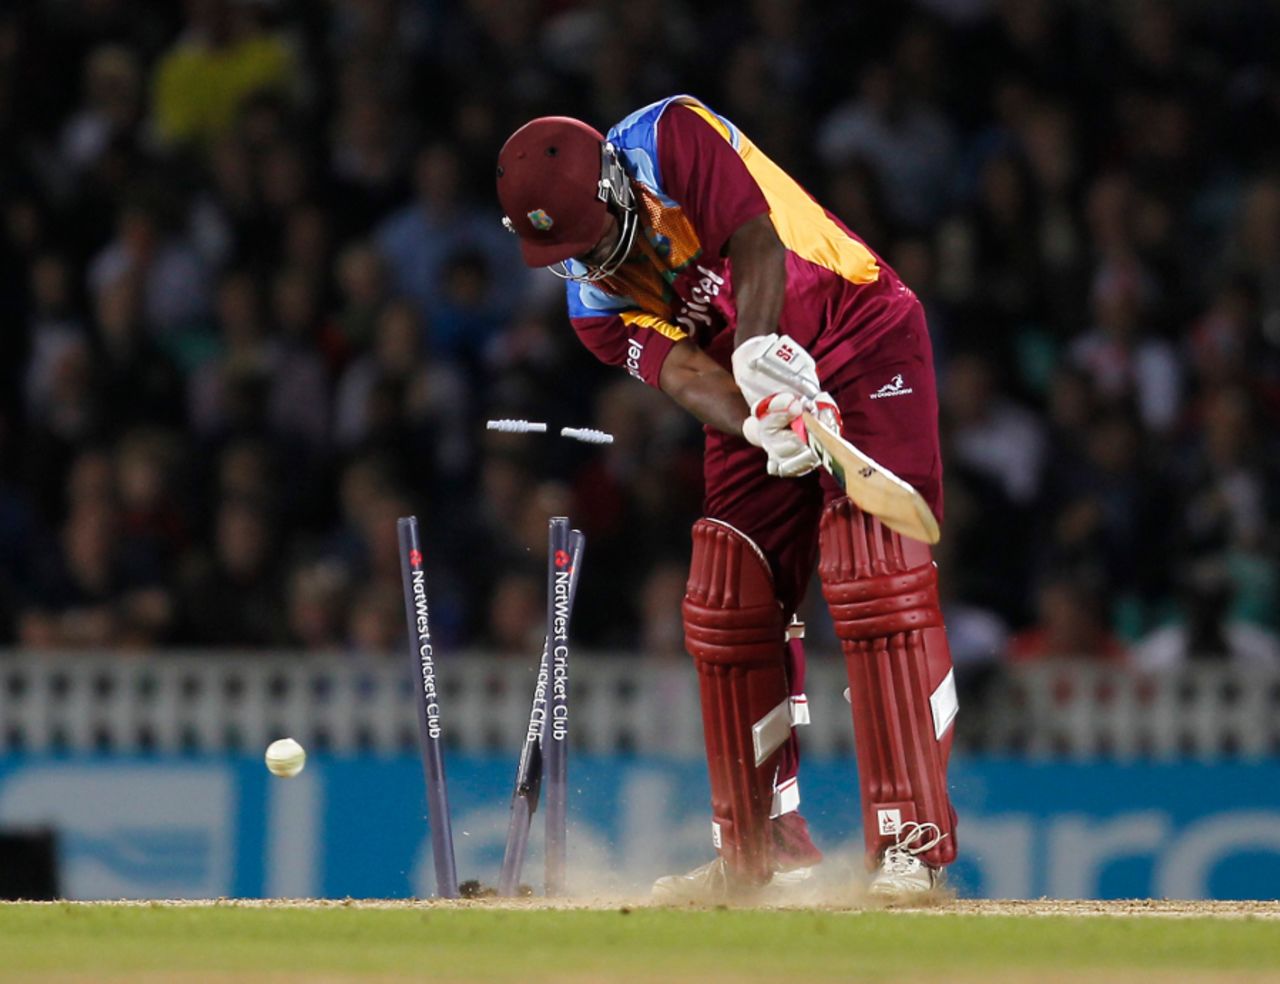 Derwin Christian had his stumps shattered by Jade Dernbach, England v West Indies, 1st Twenty20, The Oval, September 23, 2011